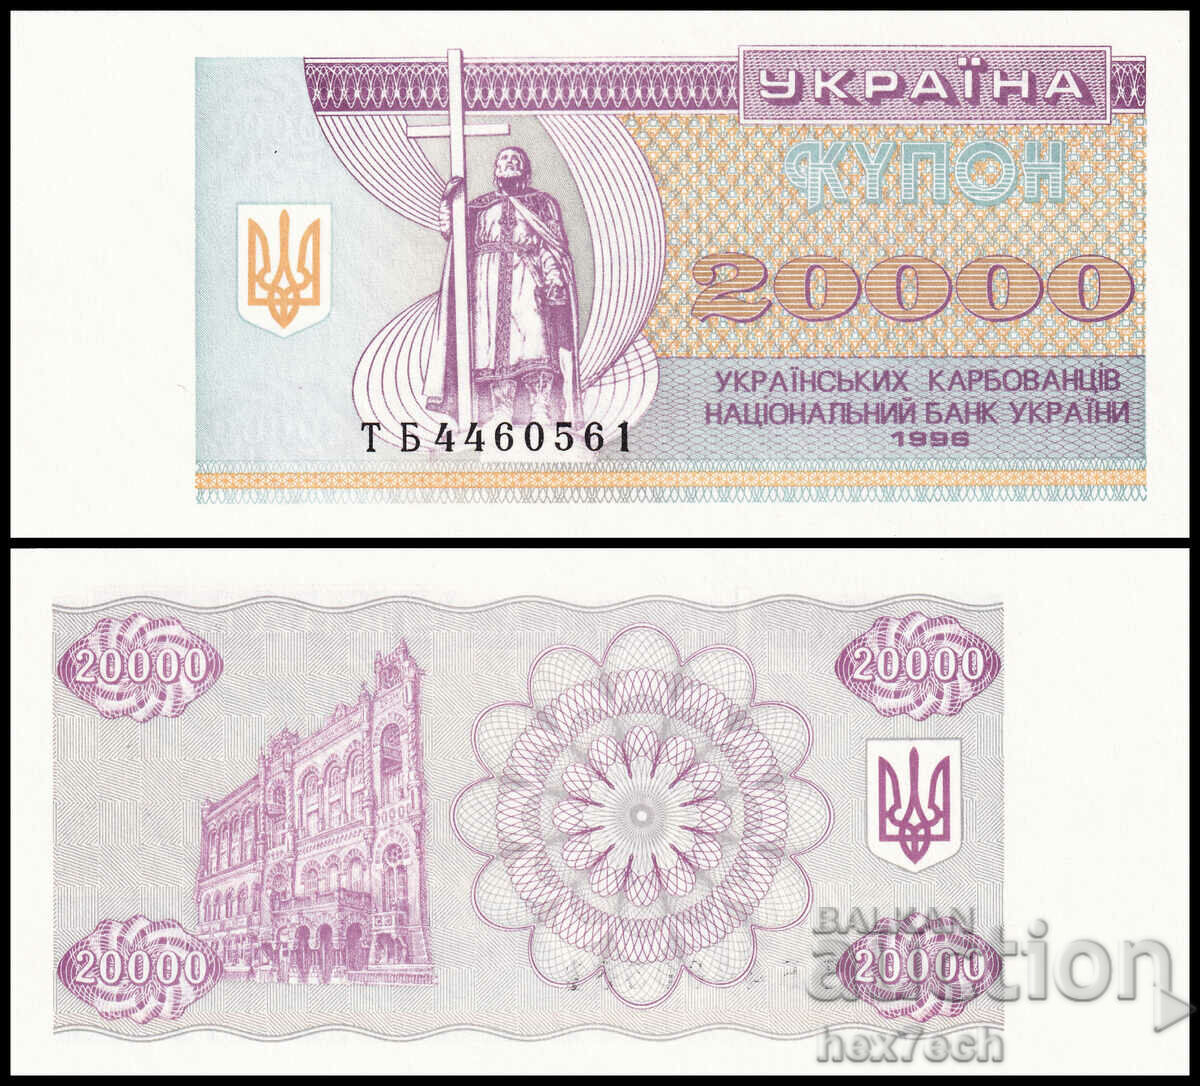 ❤️ ⭐ Ukraine 1996 20000 karbovants UNC new ⭐ ❤️